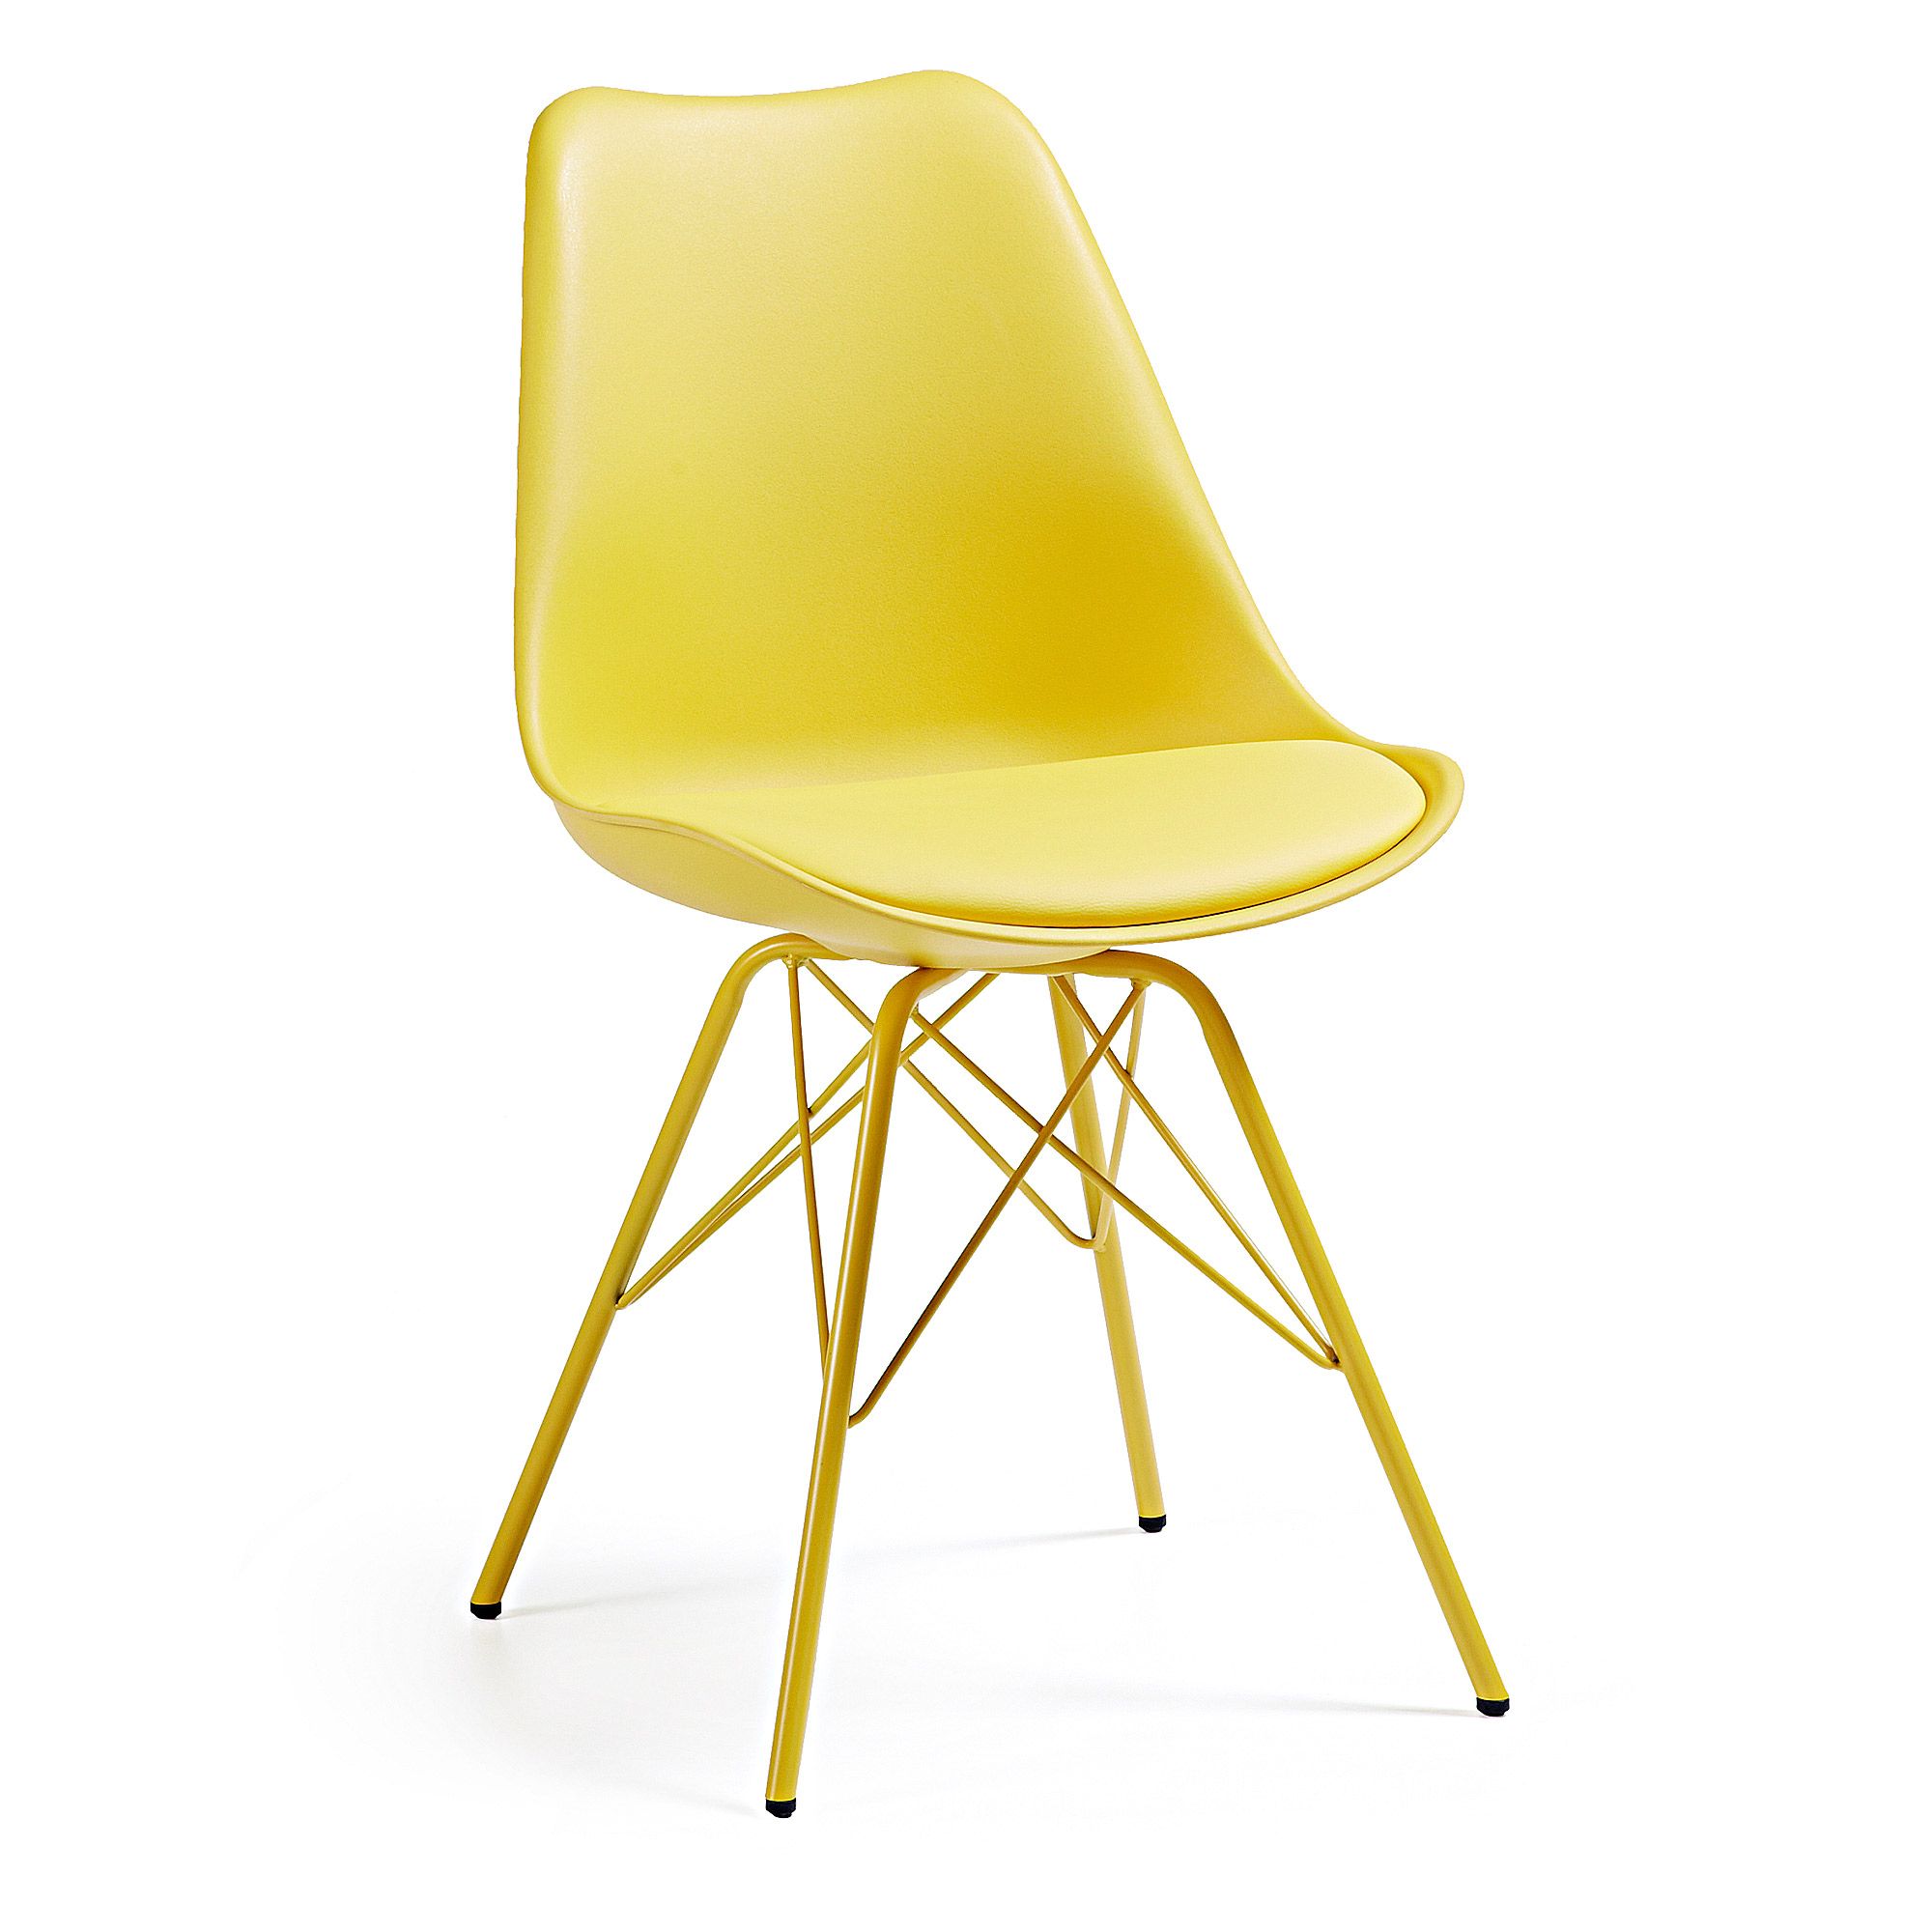 Yellow chair. Стул Lars,c975u31, желтый. Стул Julia grup Lars. Стул Lars желтый c632jq81. La forma стулья.